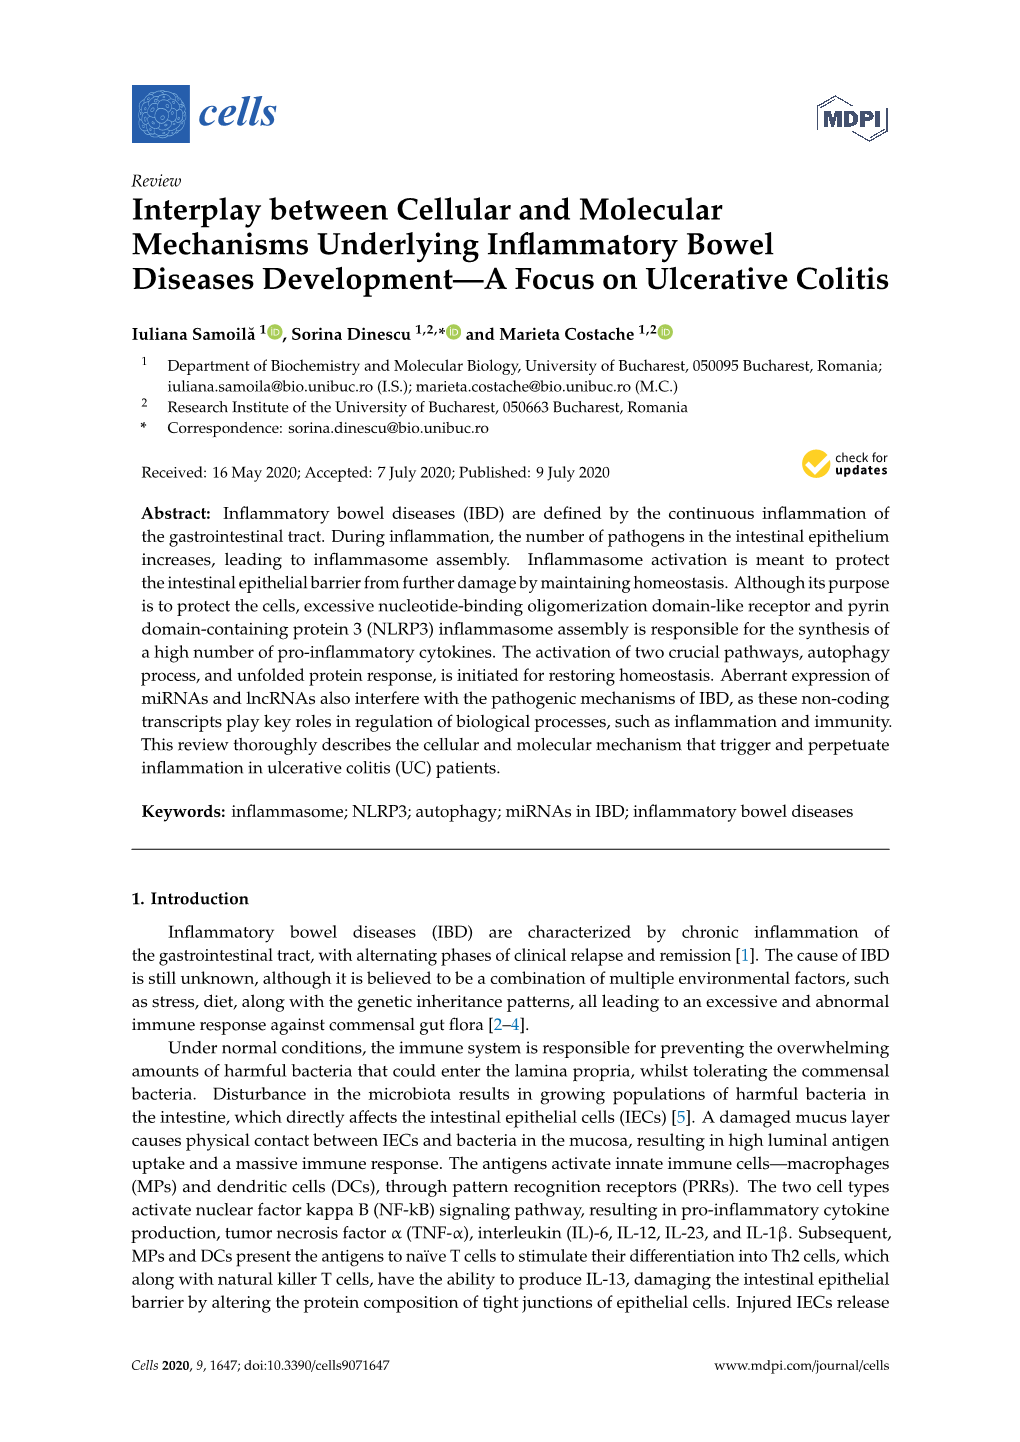 Interplay Between Cellular and Molecular Mechanisms Underlying Inﬂammatory Bowel Diseases Development—A Focus on Ulcerative Colitis